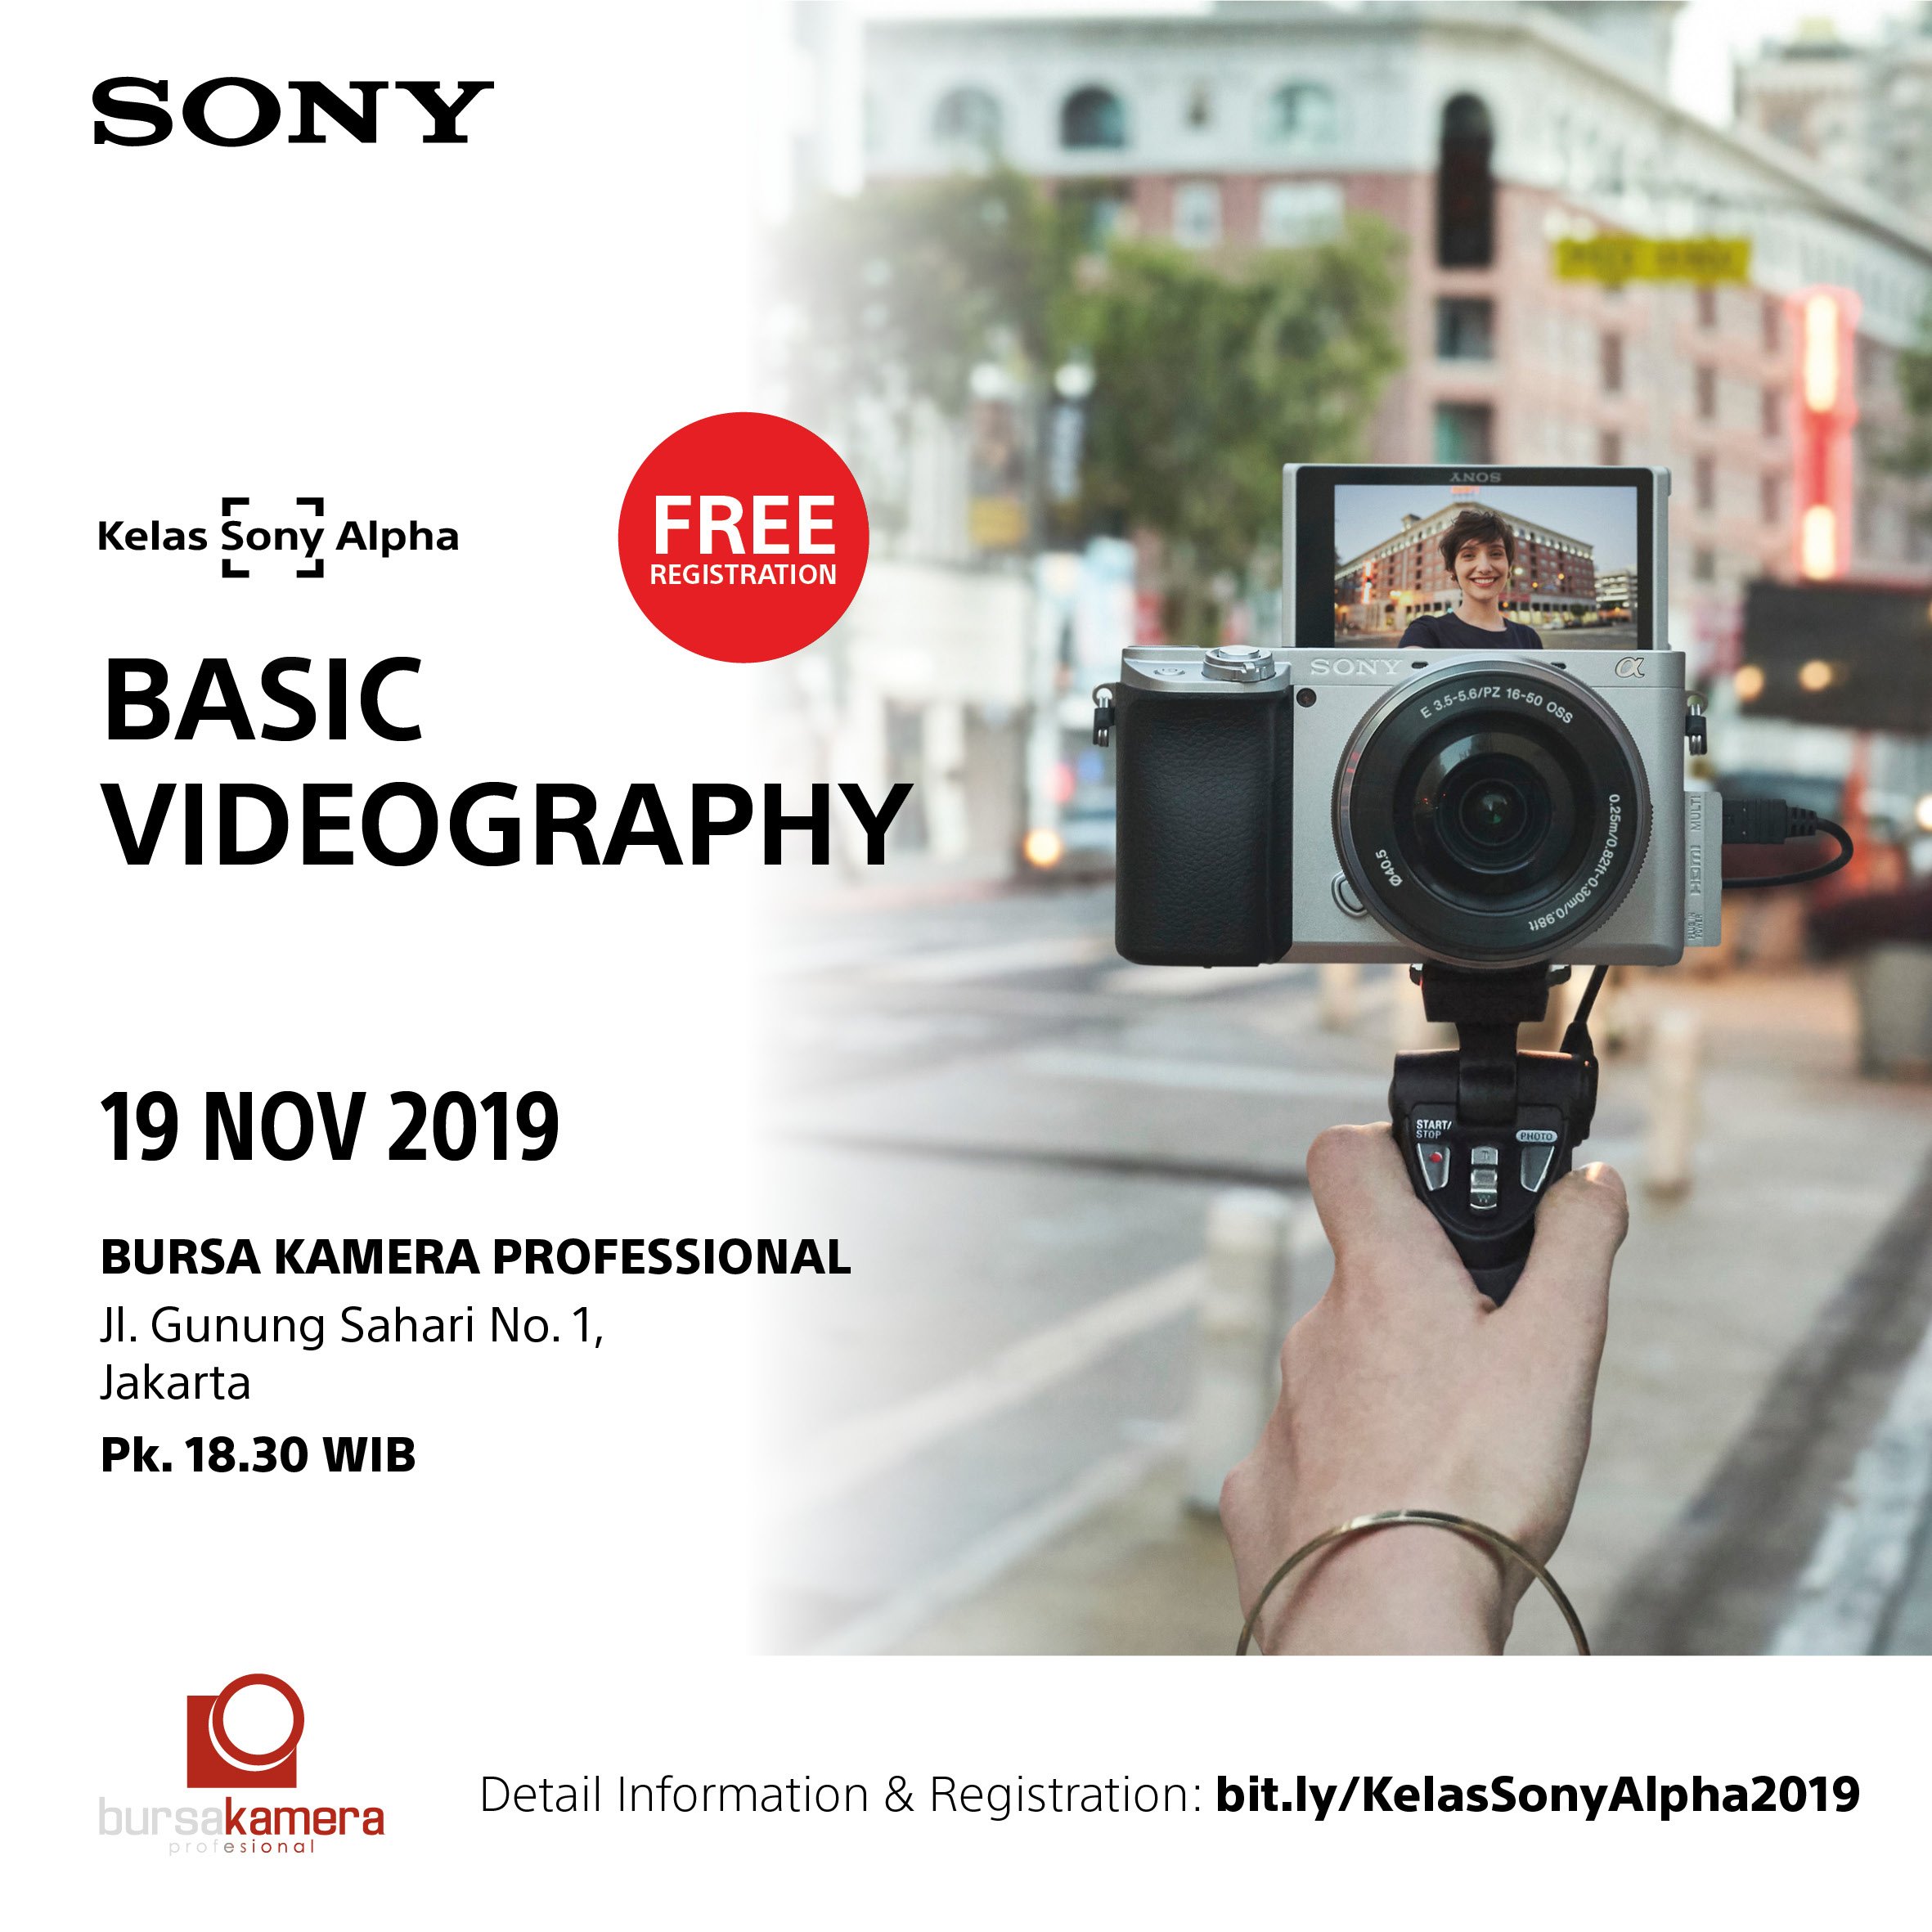 Kelas Sony Alpha Basic Videography